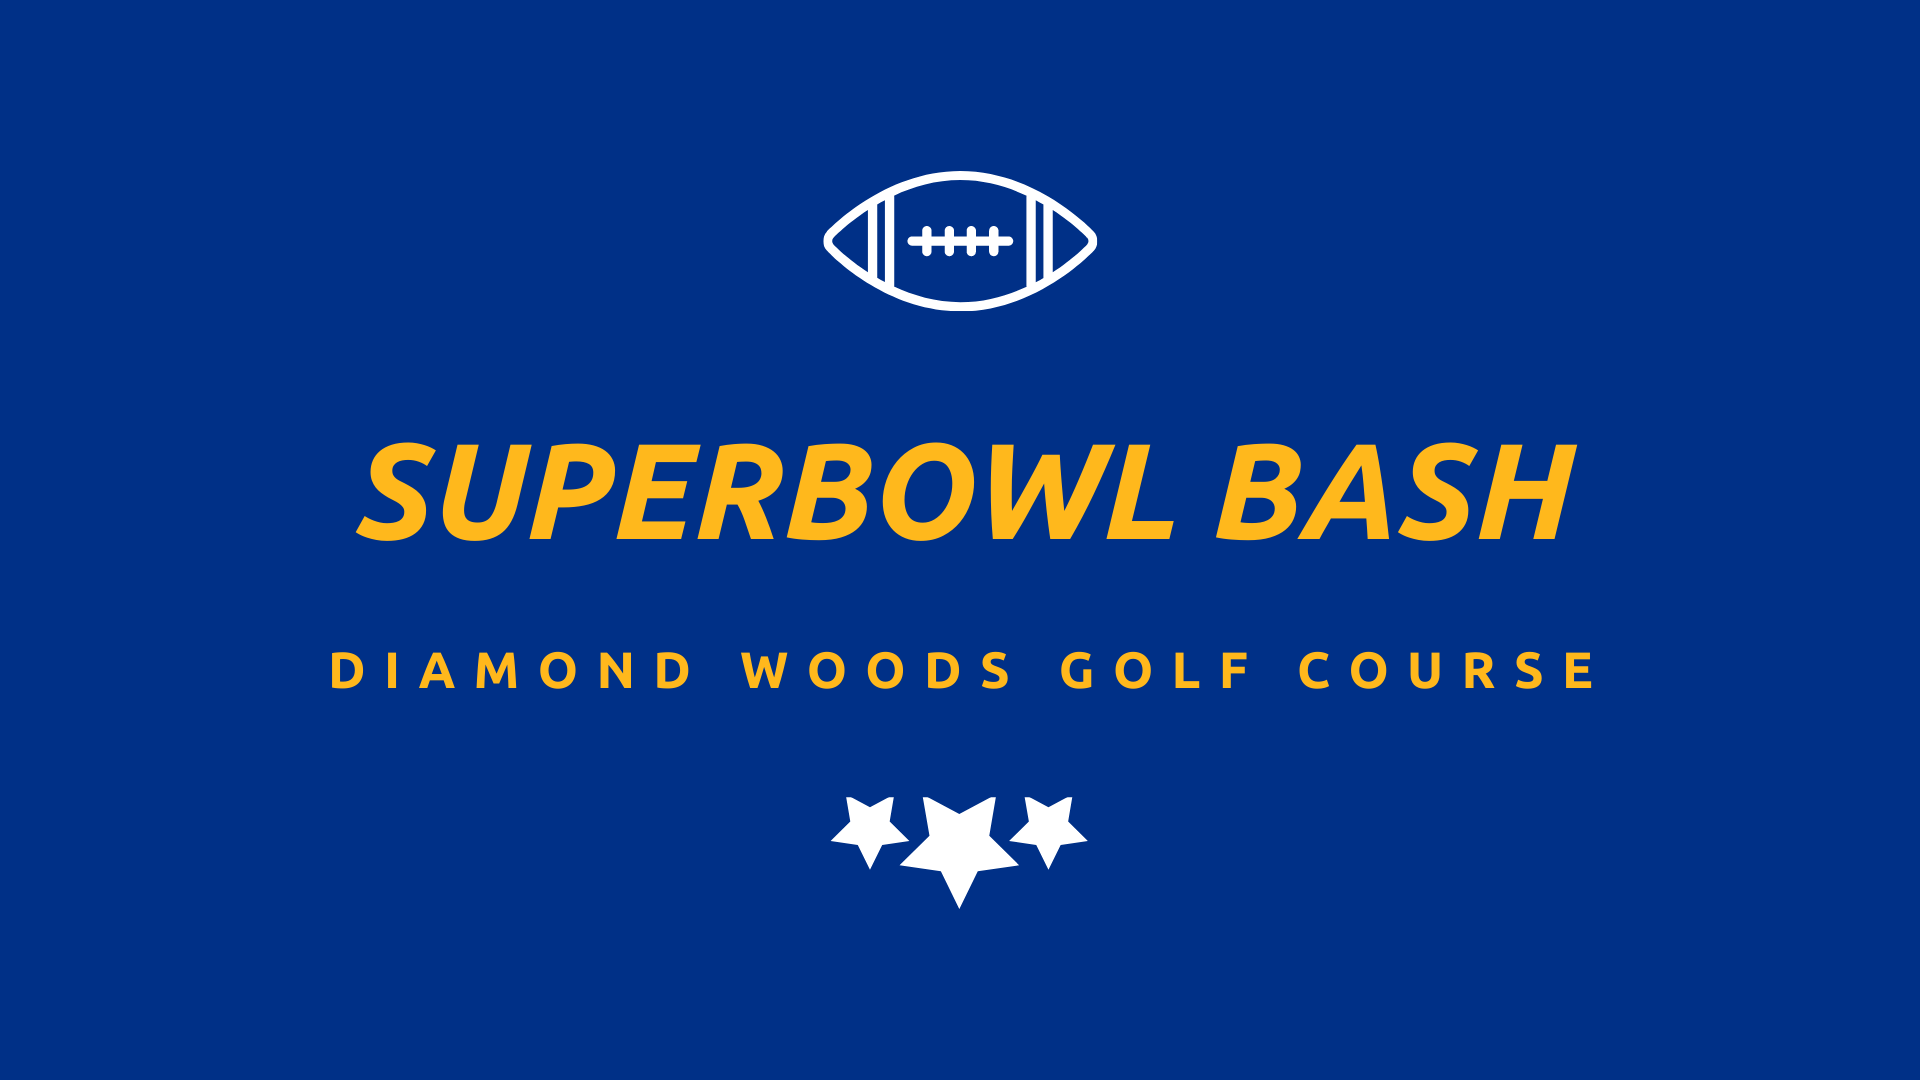 The Superbowl Bash at Diamond Woods